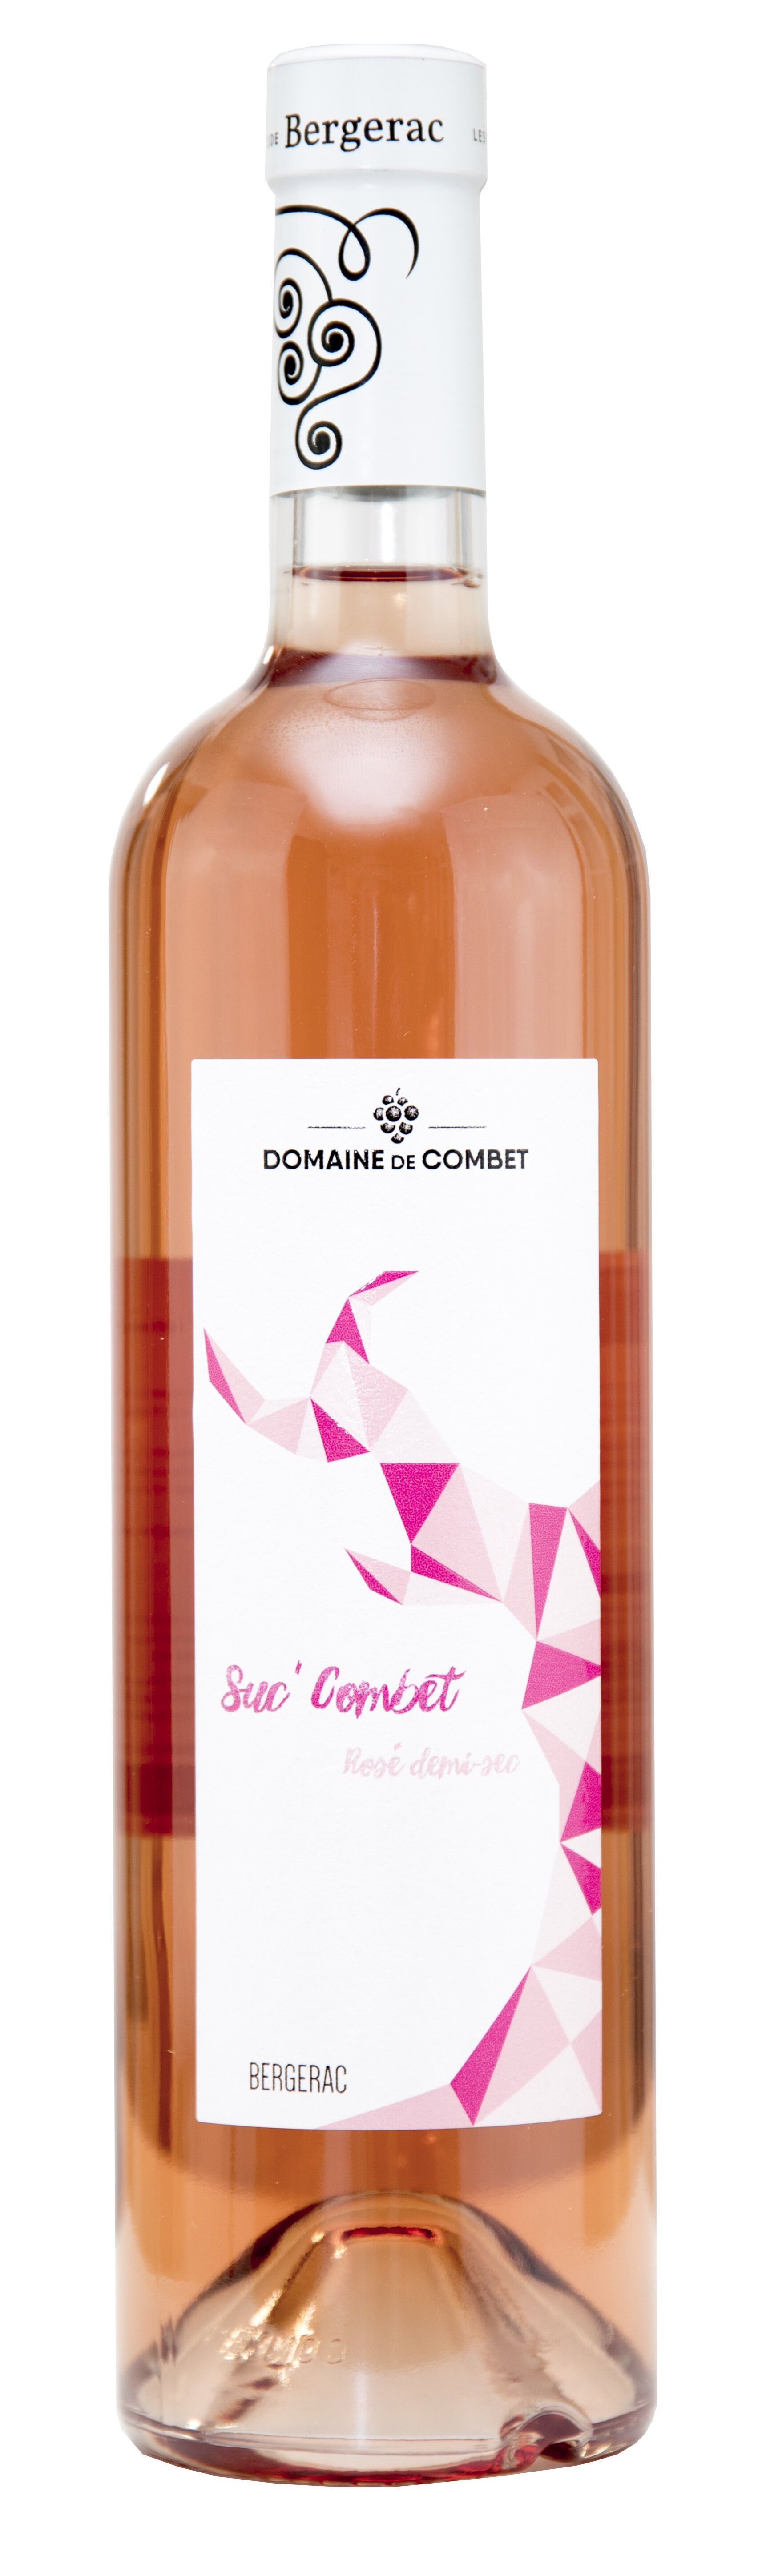 Earl de Combet SUC'COMBET, Rosado, 2021, Bergerac. Bottle image